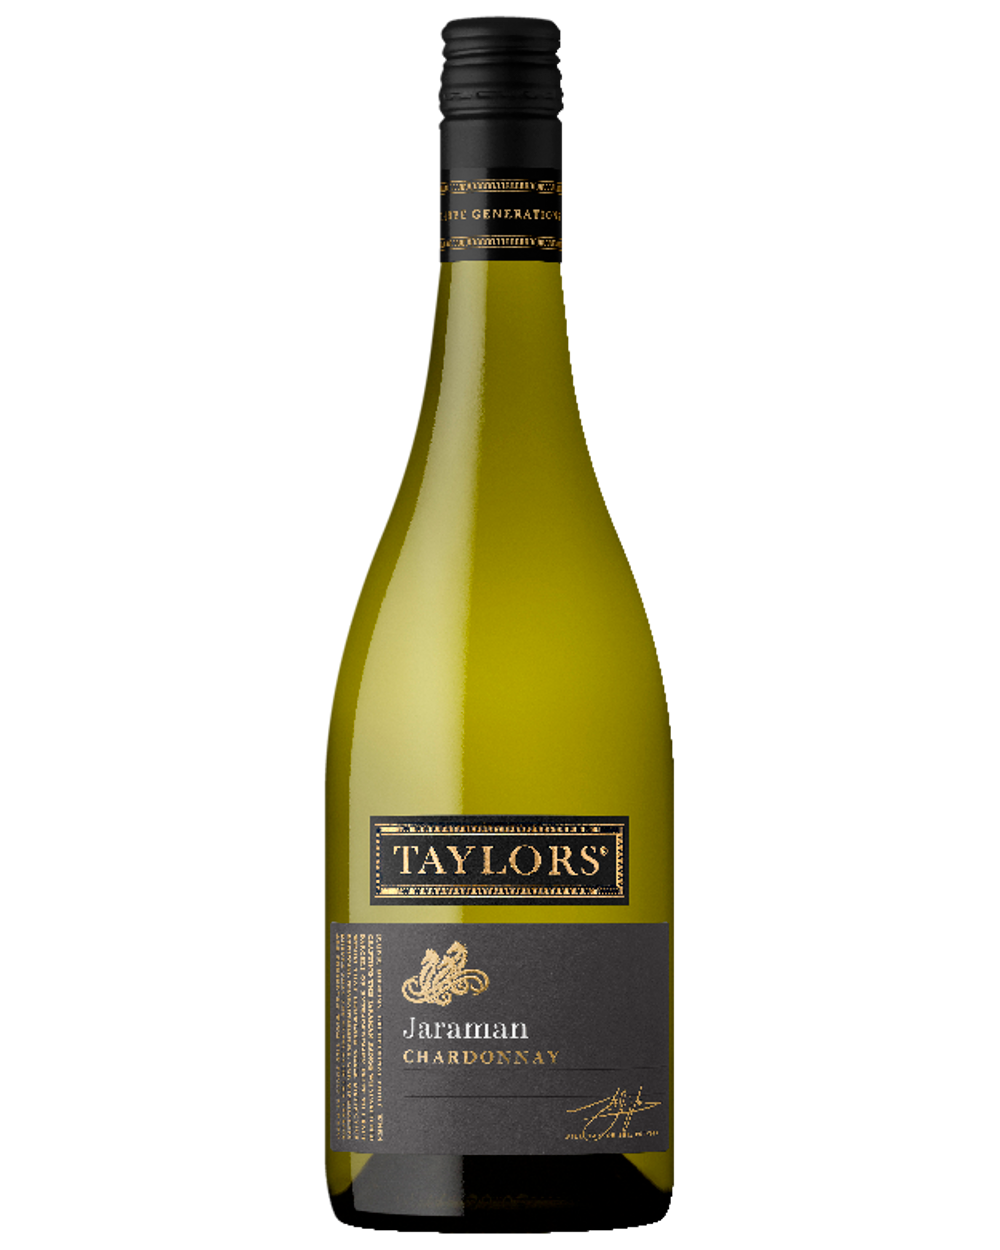 Taylors Jaraman Chardonnay